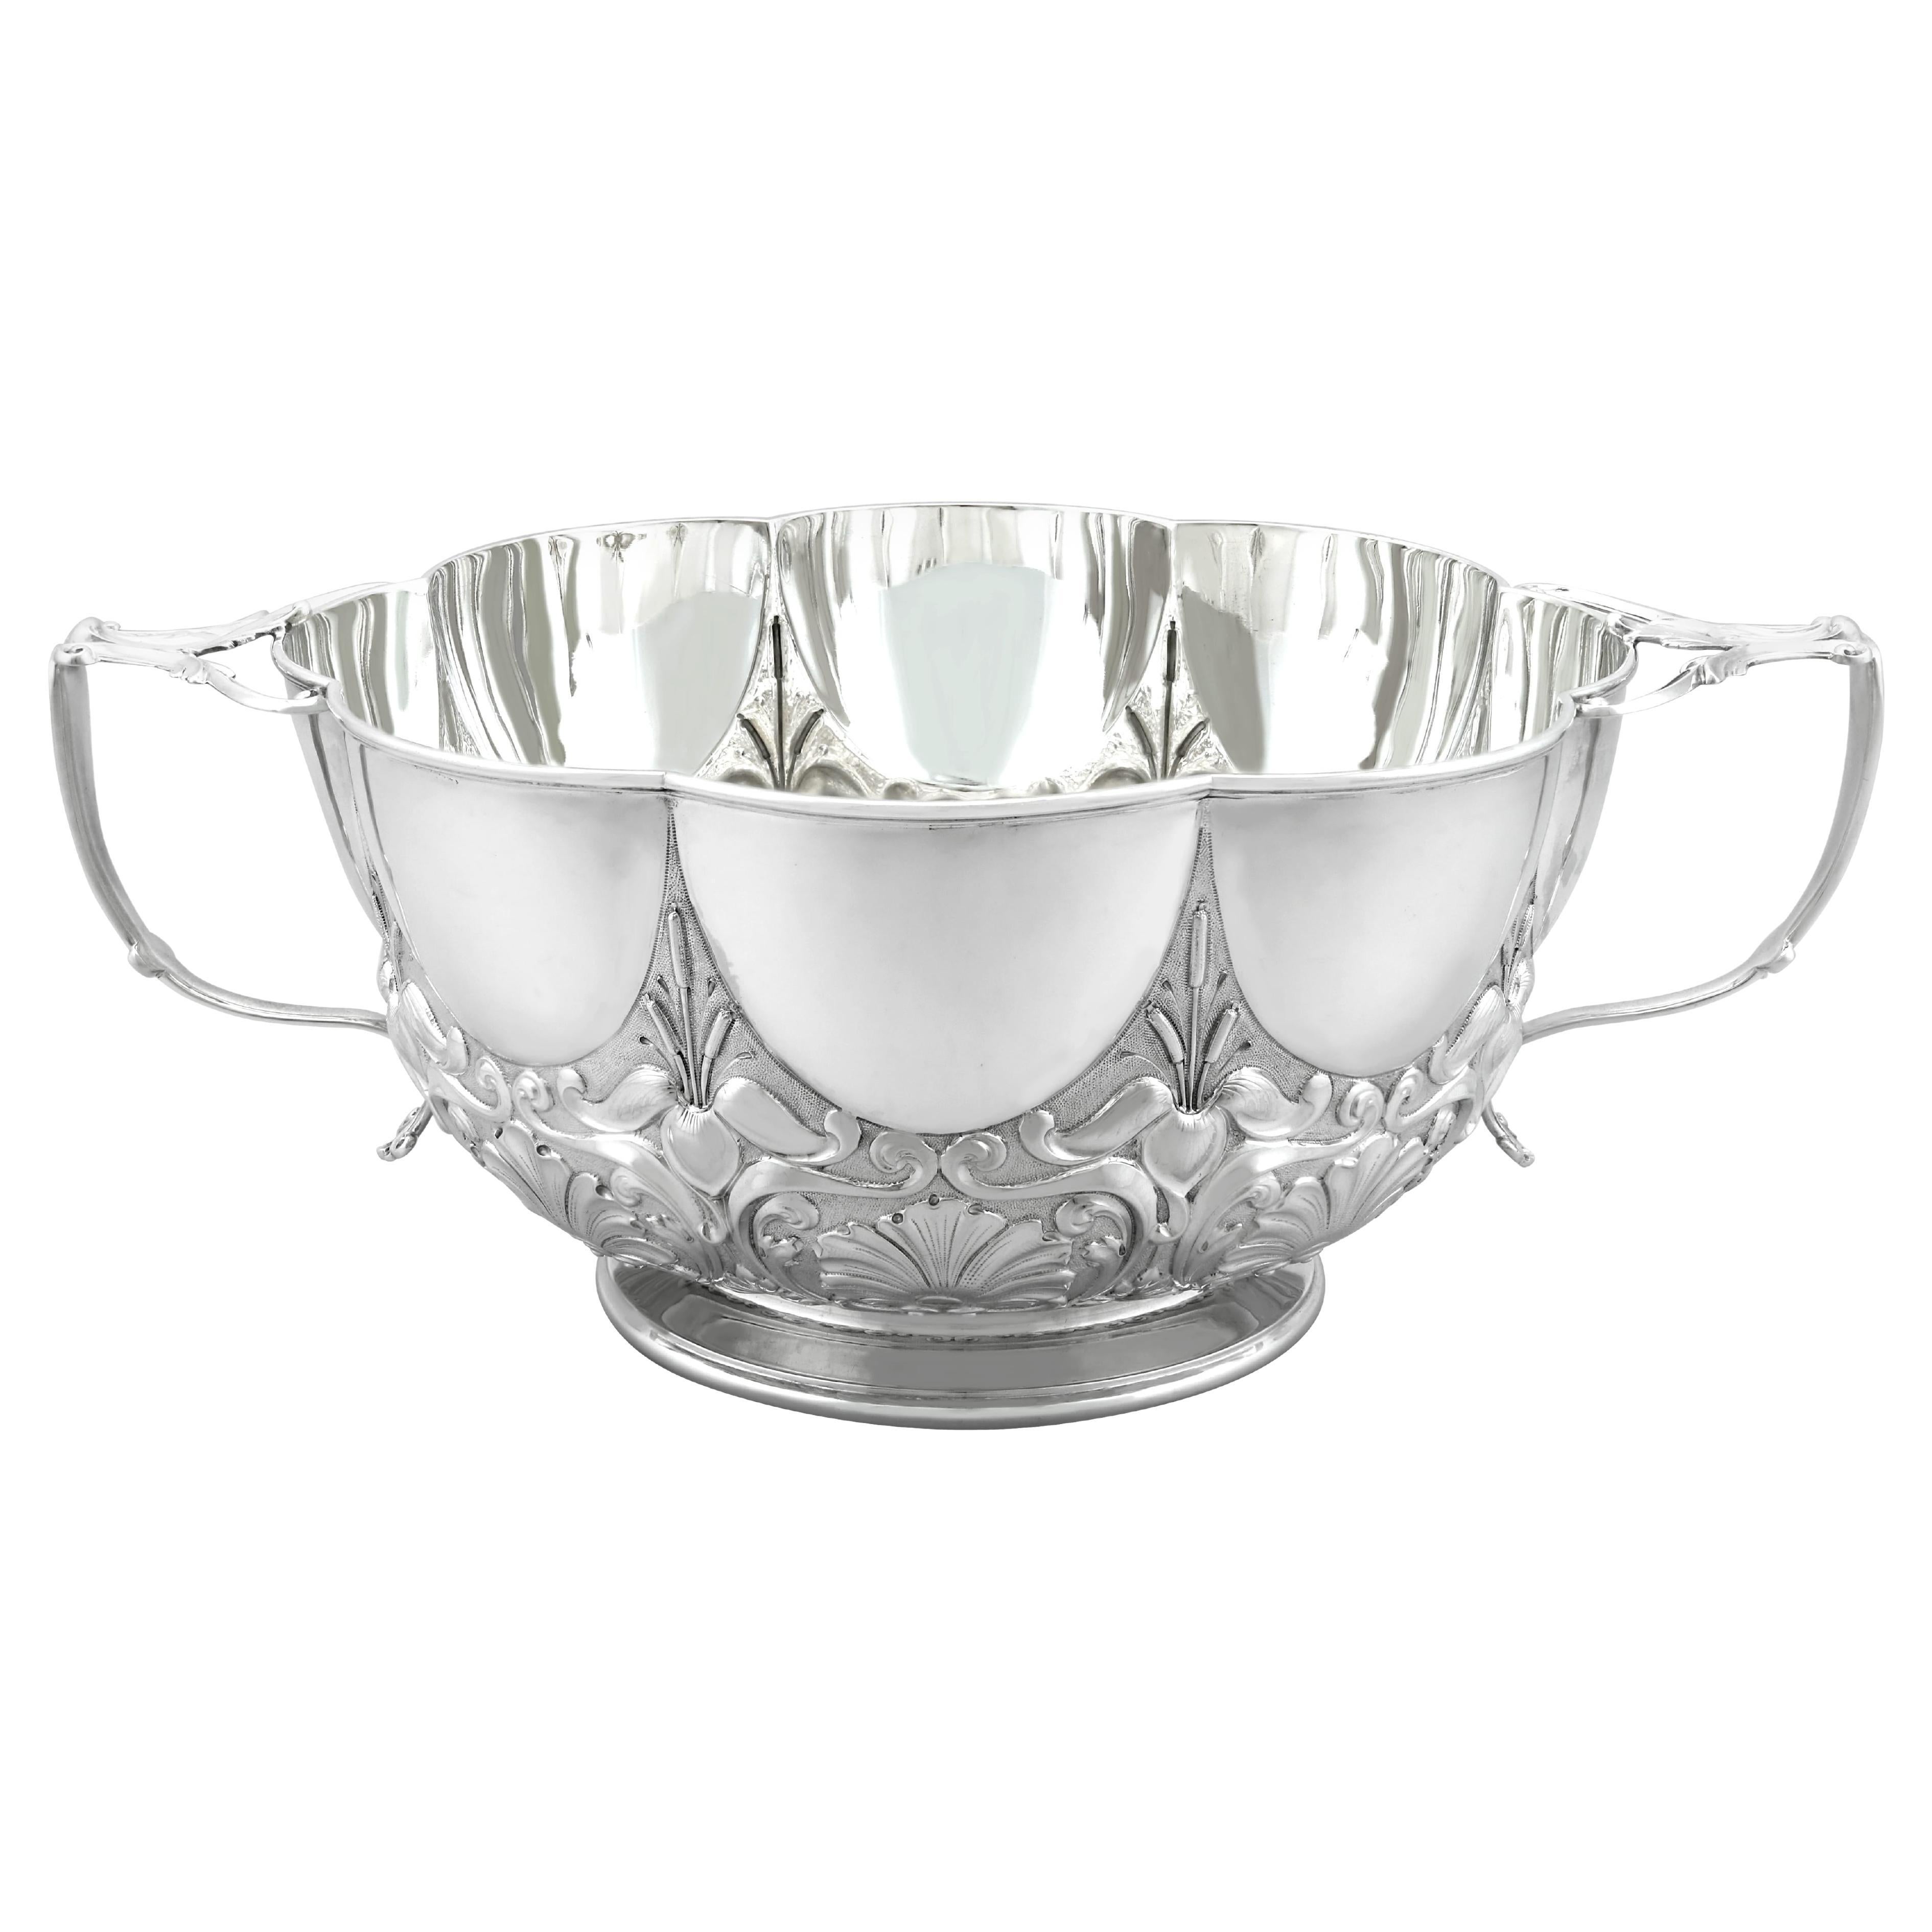 Edwardian English Sterling Silver Bowl Art Nouveau Style For Sale